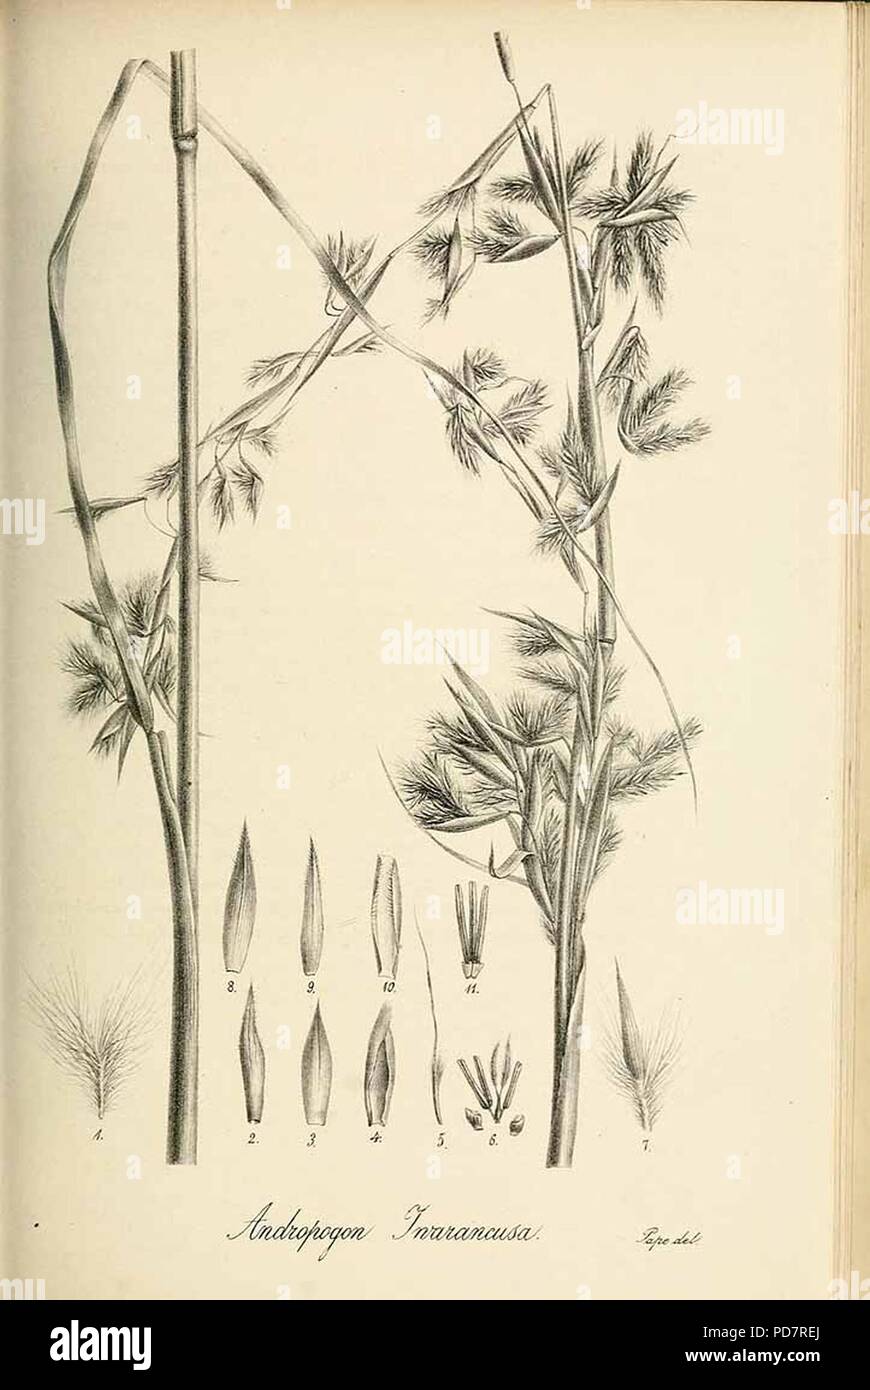 Andropogon jwarancusa - Species graminum - Volume 3. Stock Photo